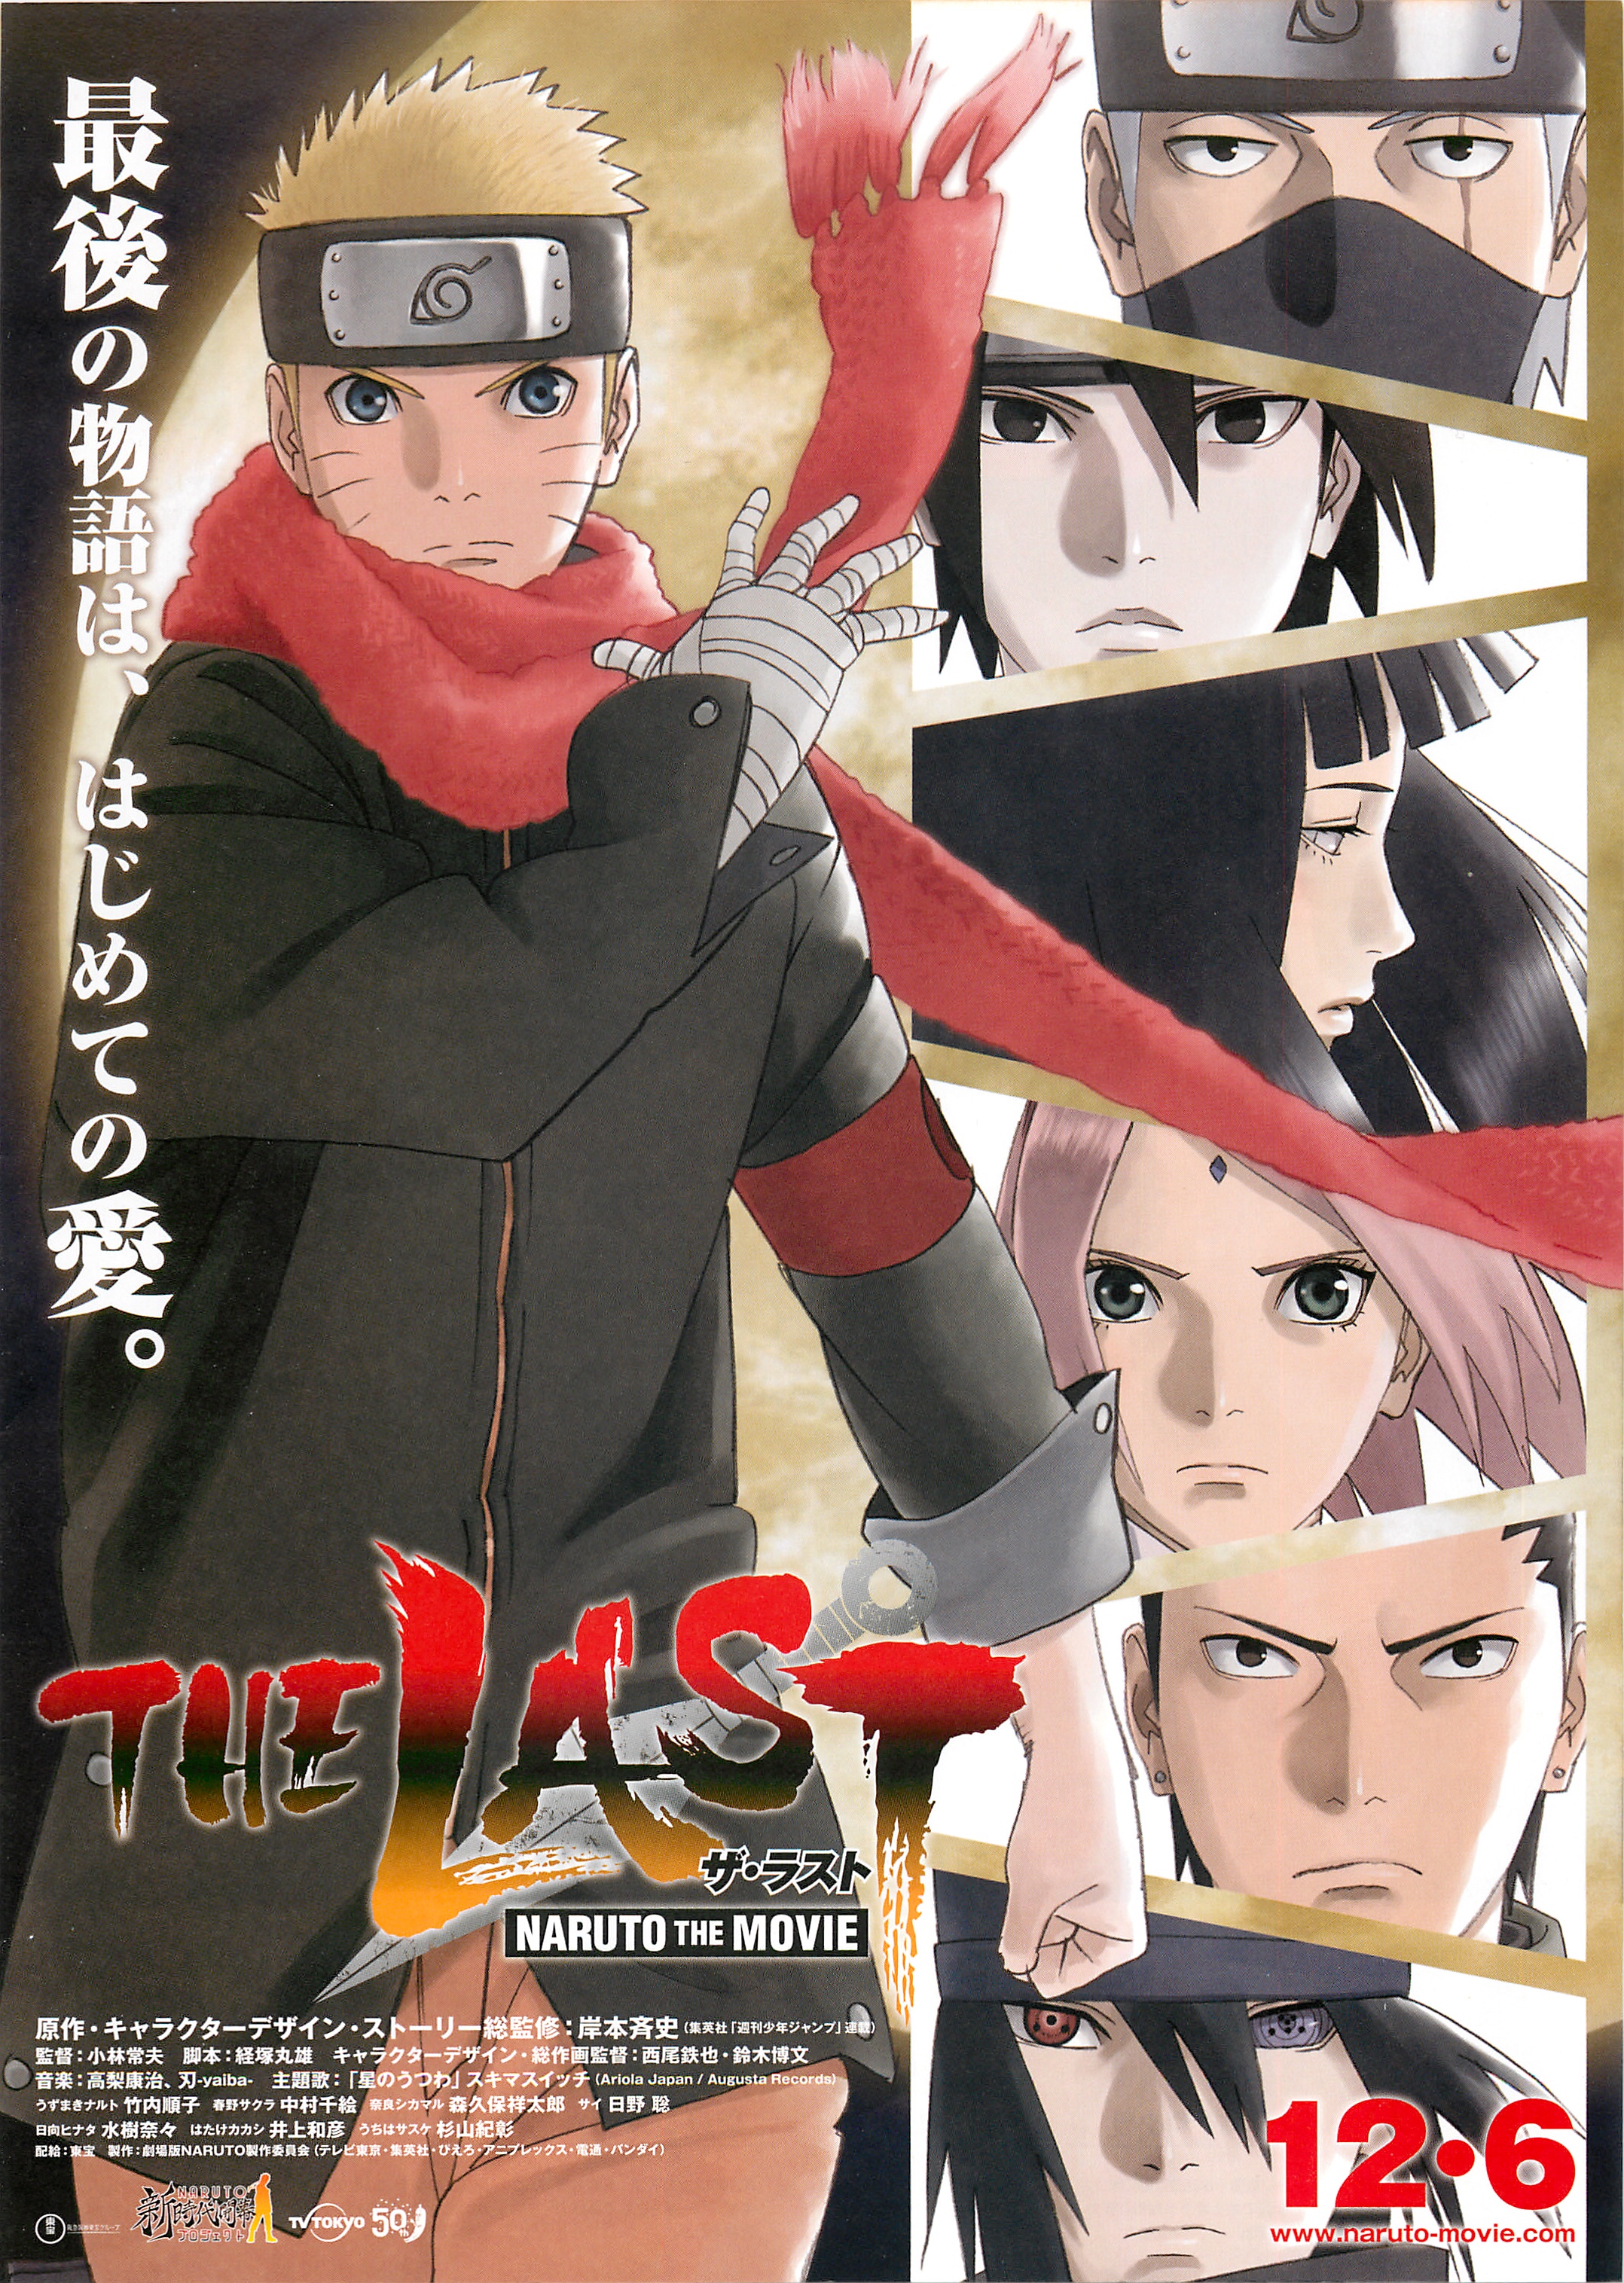 Naruto the Movie The Last visual haruhichan.com Naruto Shippuuden Movie 7 - The Last